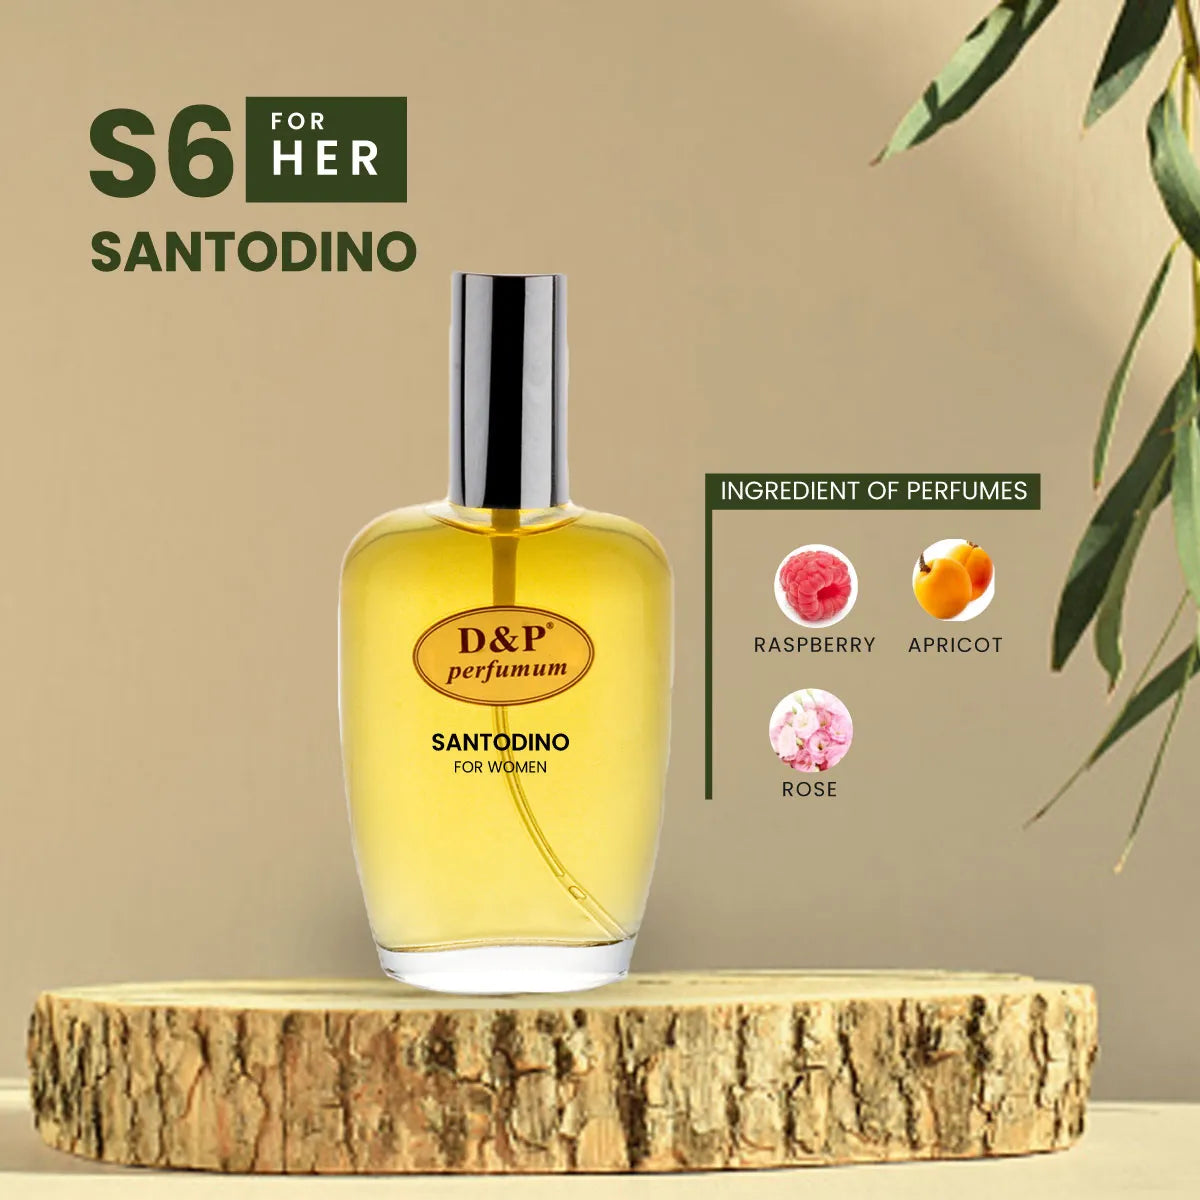 Santodino perfume for women-S6